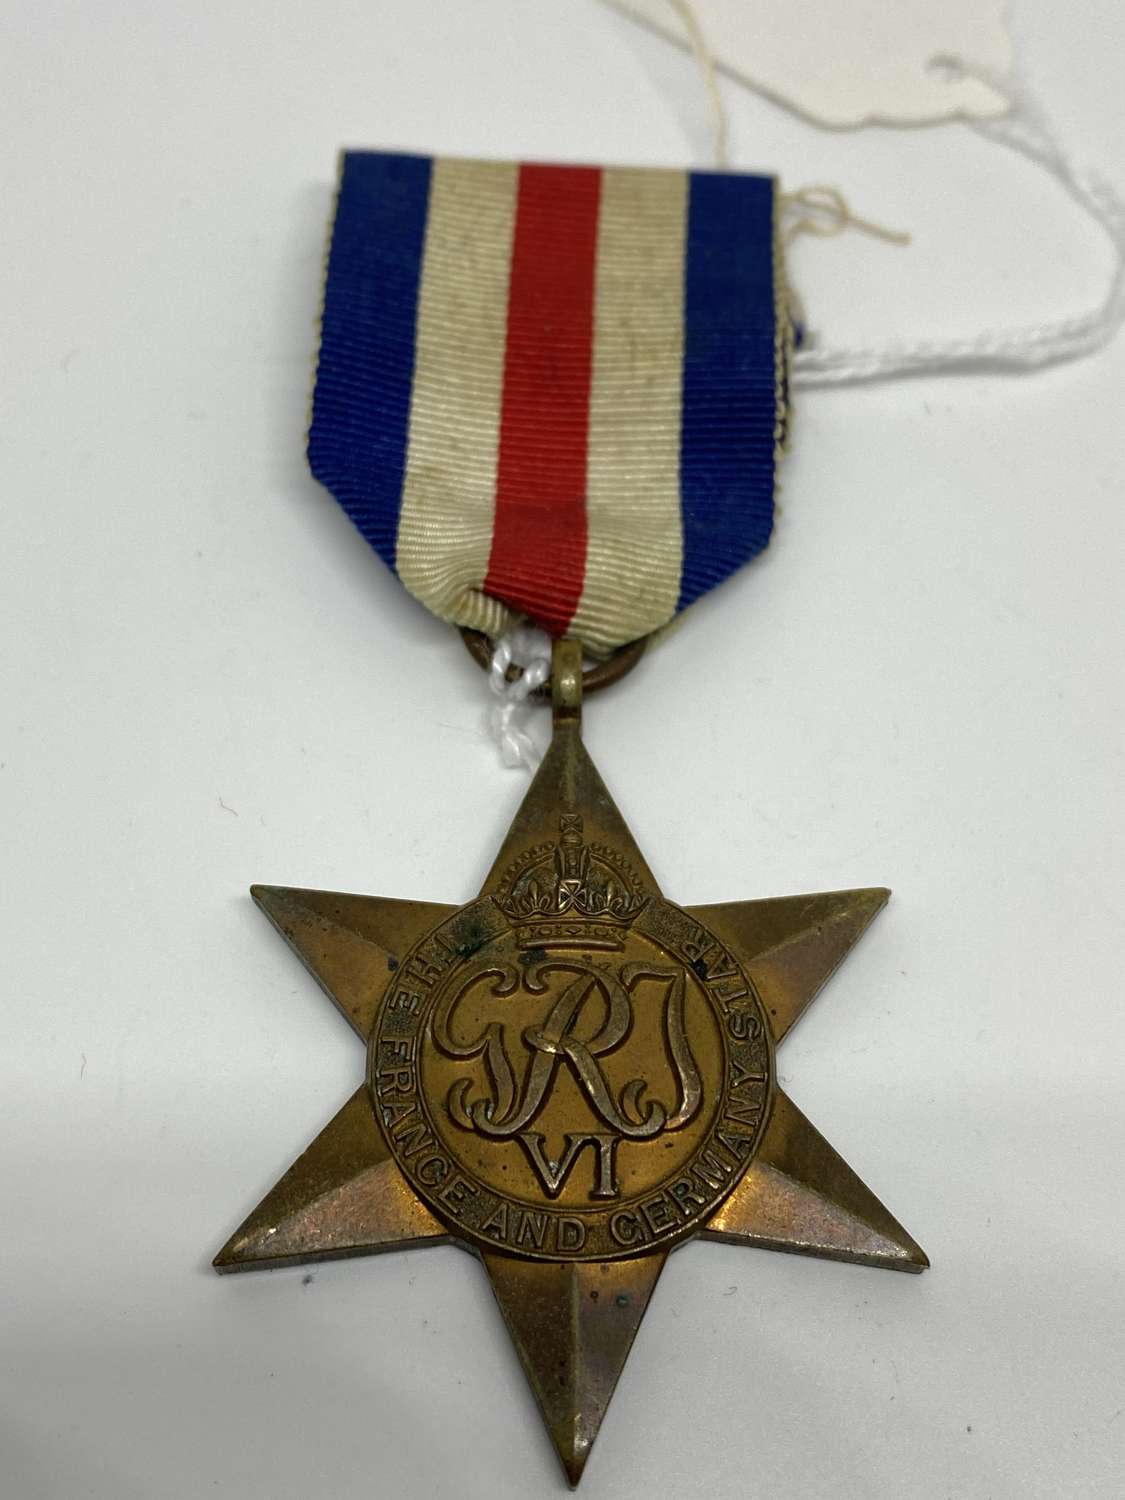 WW2 France & Germany Star Medal